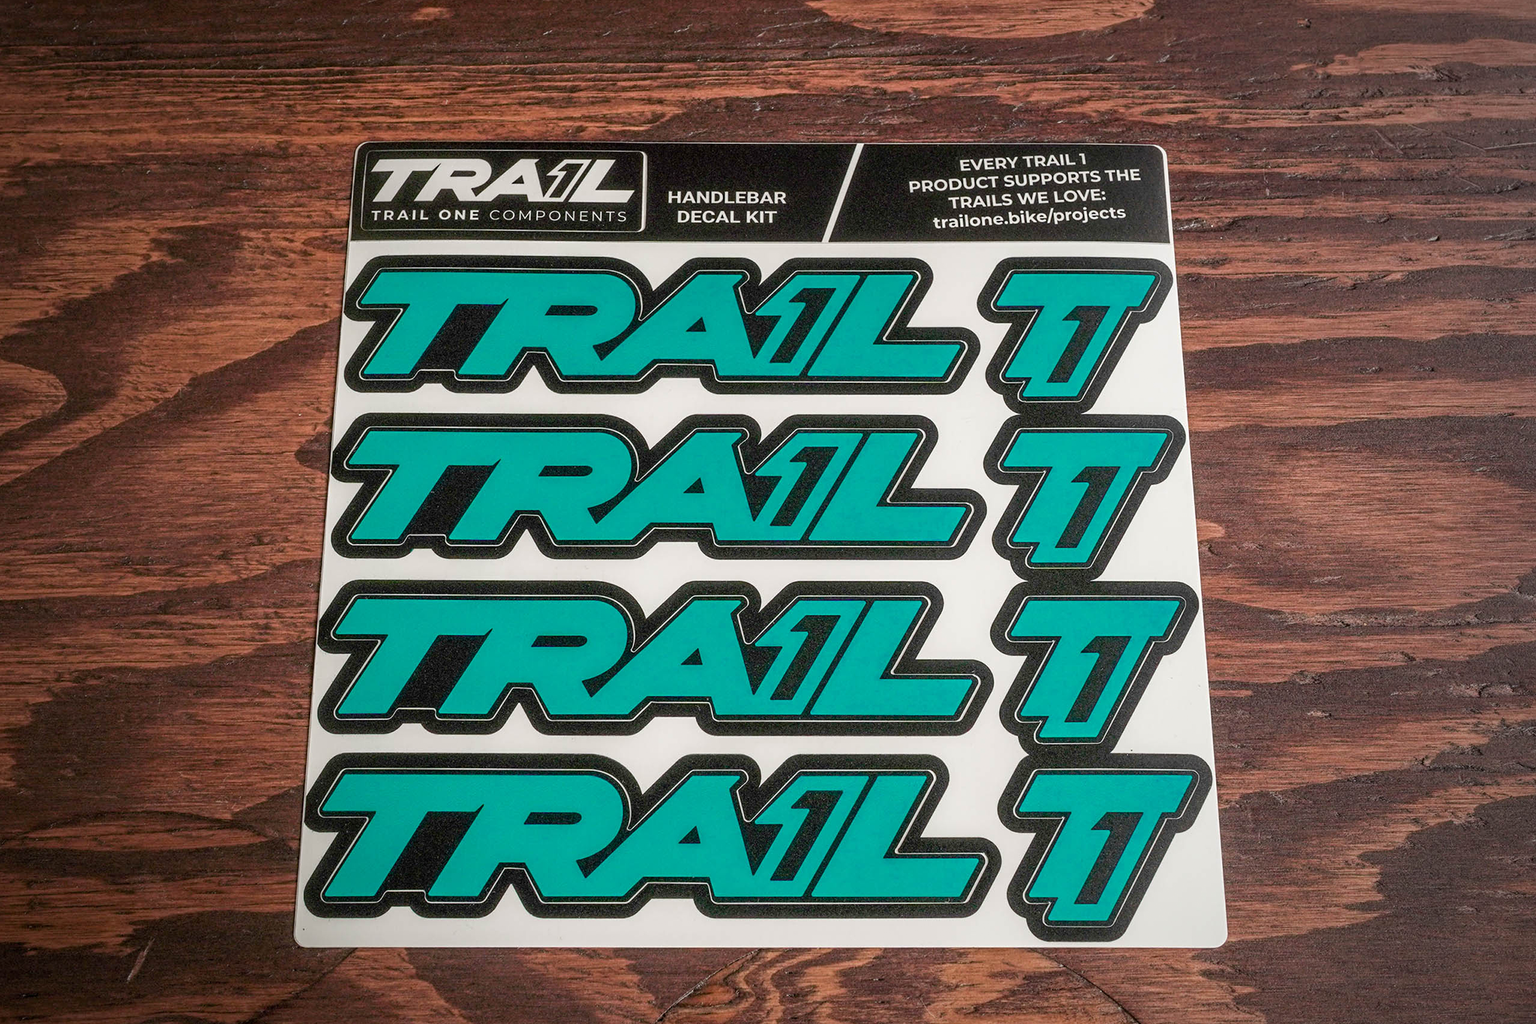 Trail One Components Crockett Handlebar Decal Kit - Turquoise - Sticker/Decal - Crockett Handlebar Decal Kit